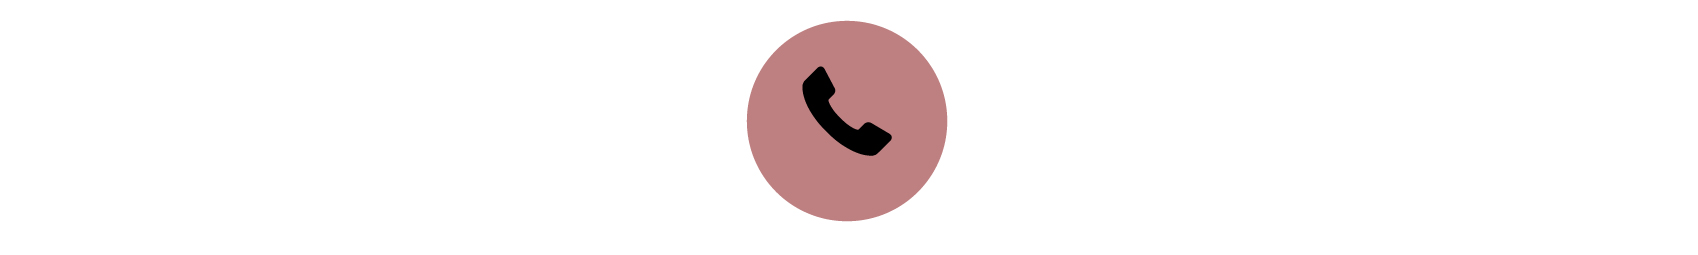 call